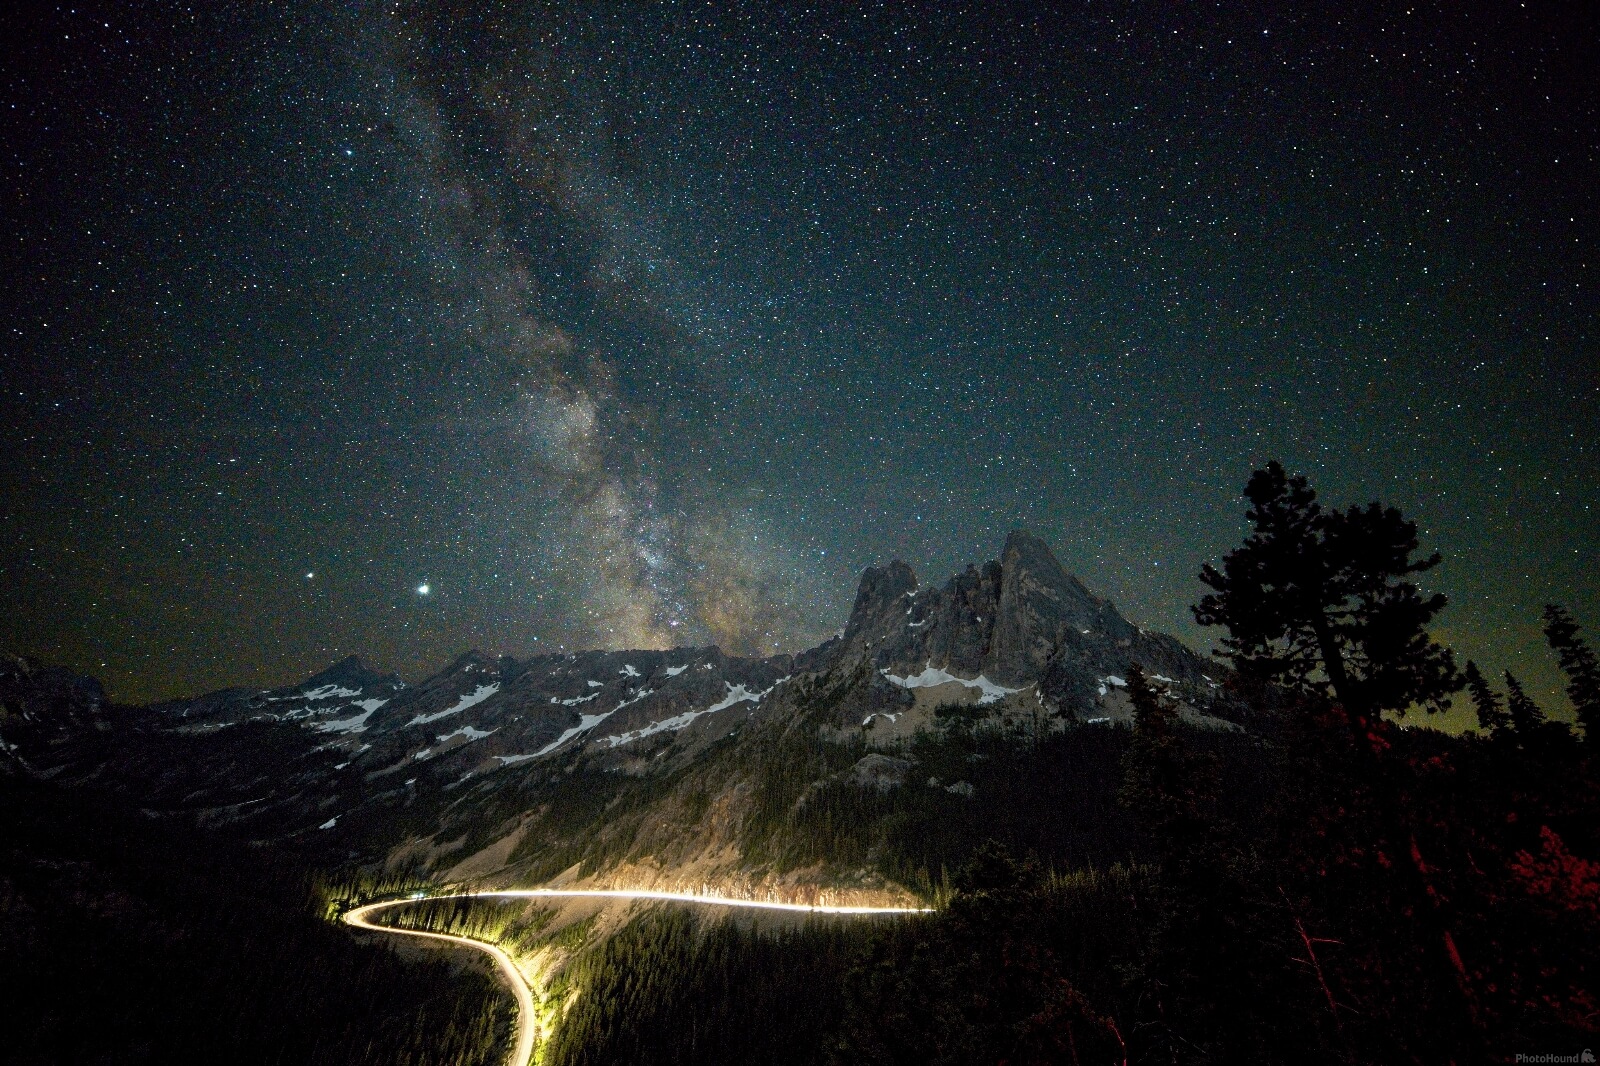 Image of Washington Pass Overlook by Shawn Swanson